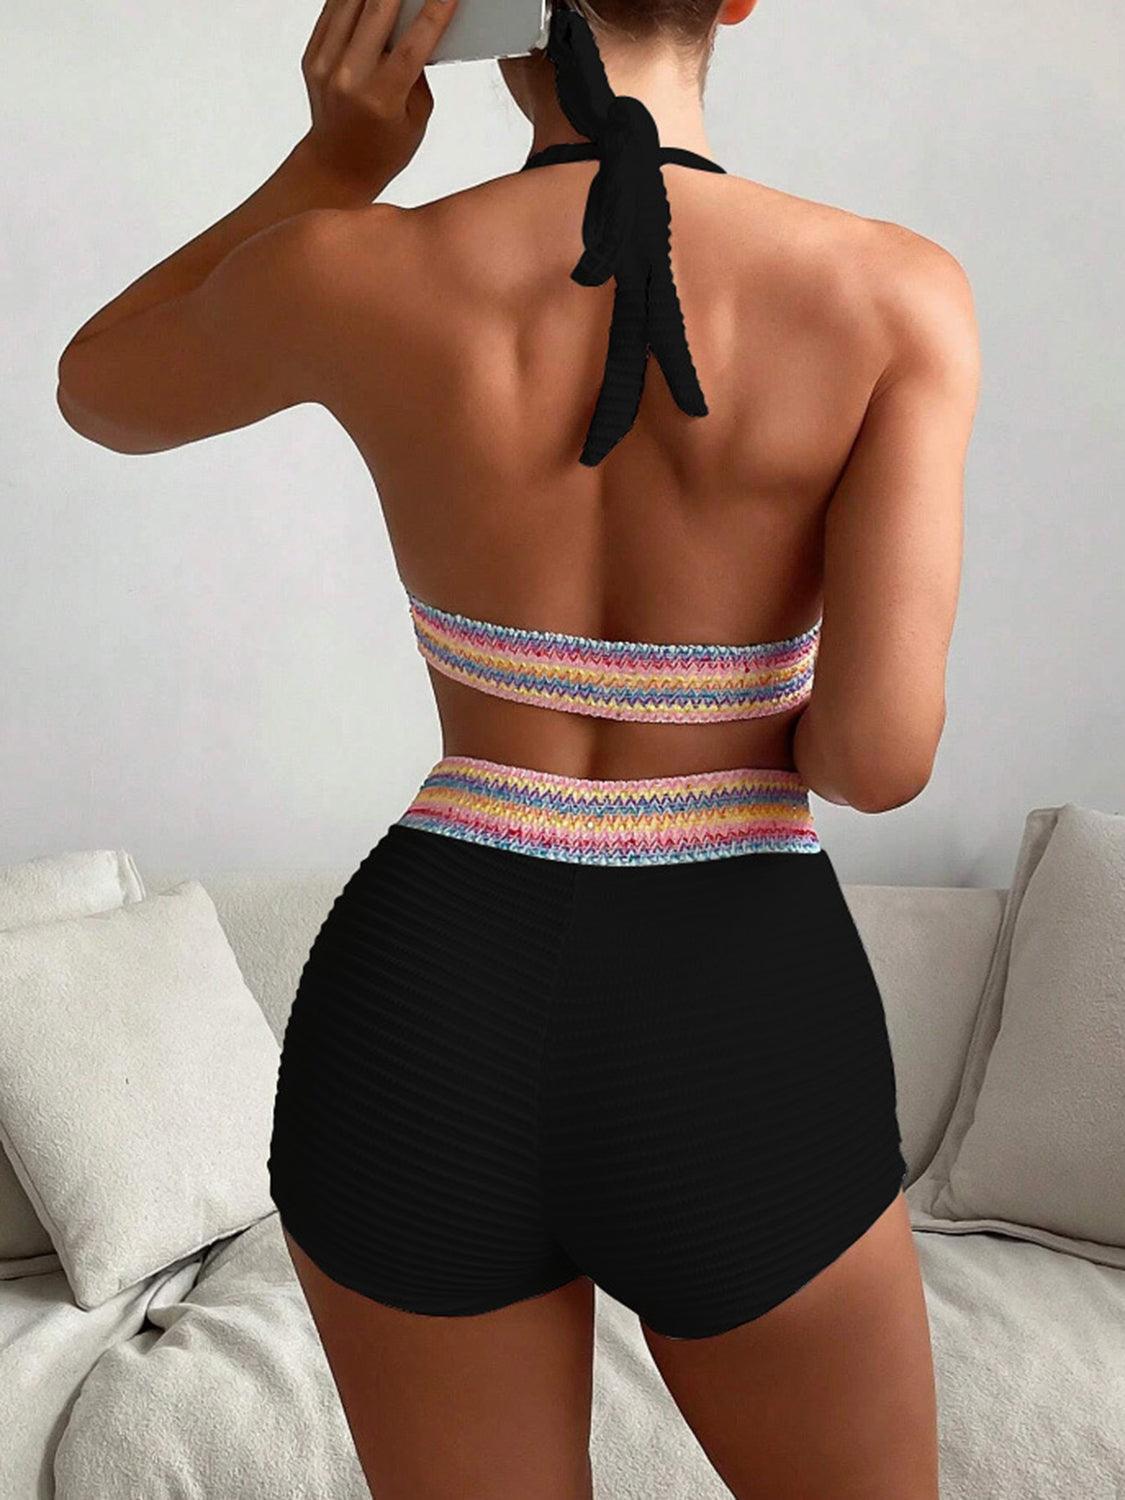 Bona Fide Fashion - Backless Textured Halter Neck Two-Piece Swim Set - Bona Fide Fashion